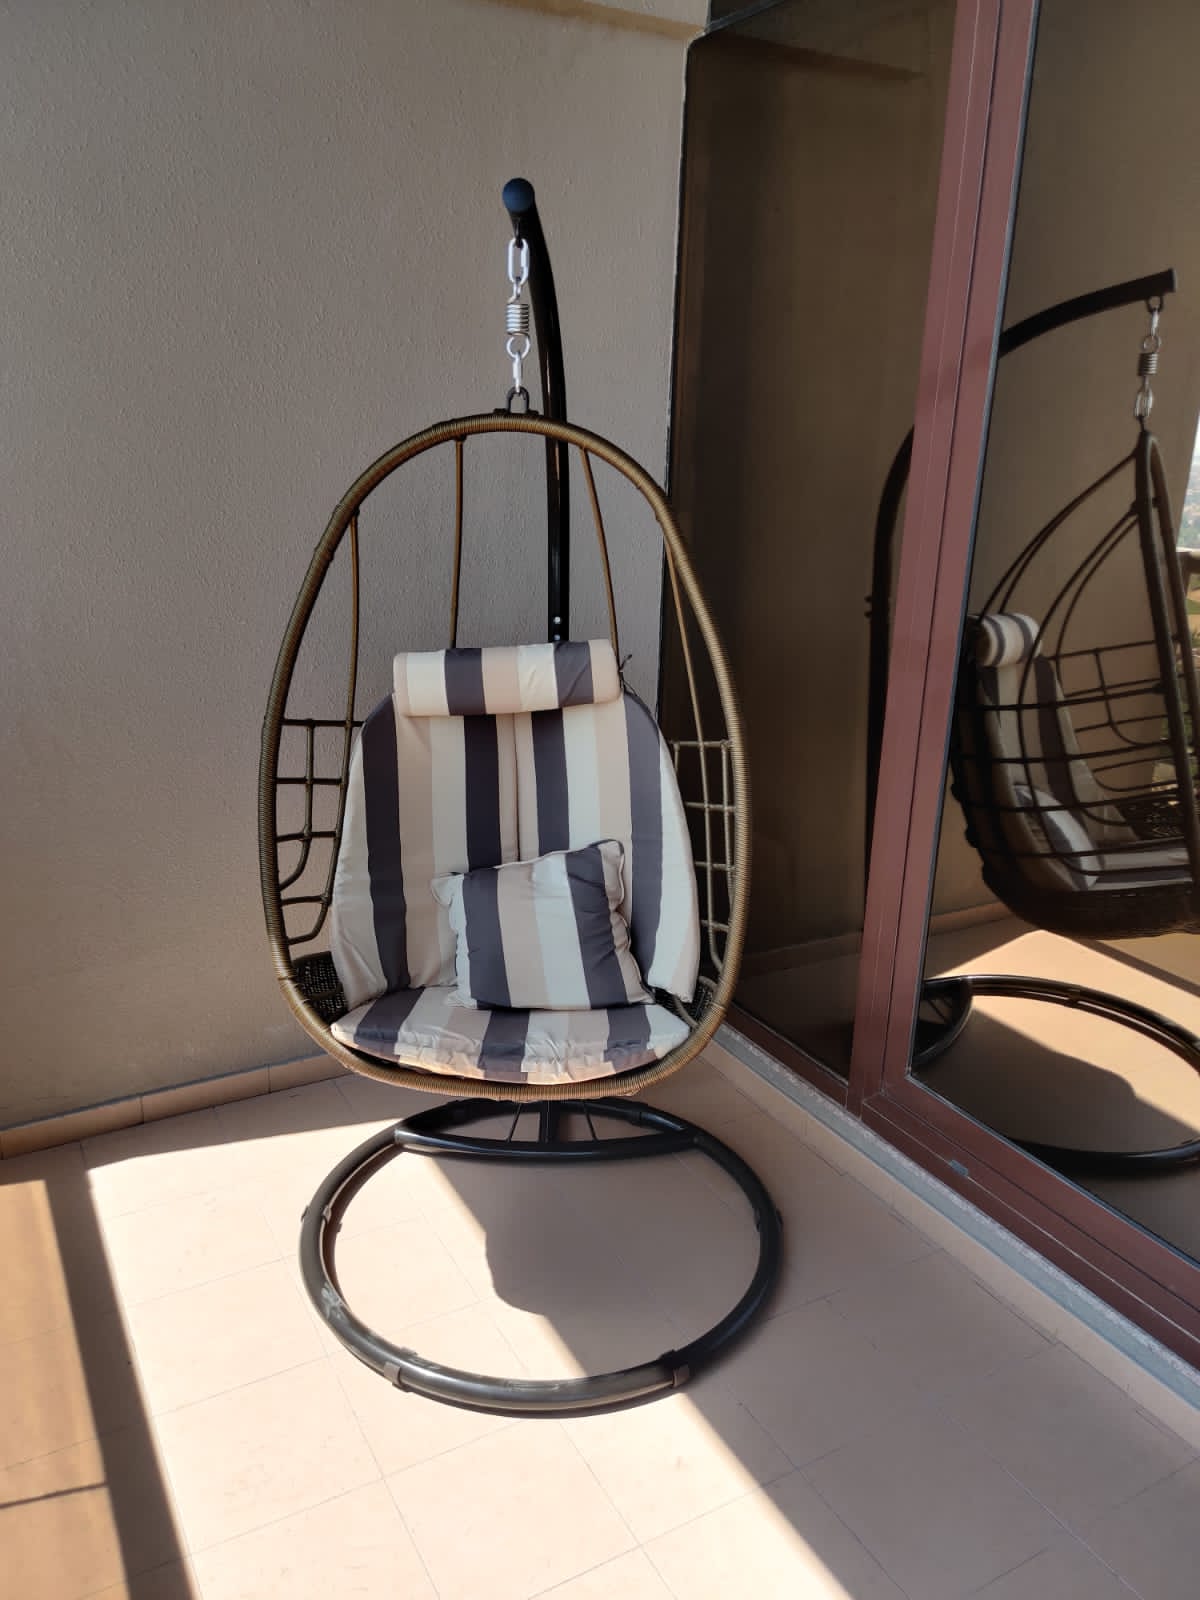 Swin Steel Frame Elegant Swin Chair-Brown photo review